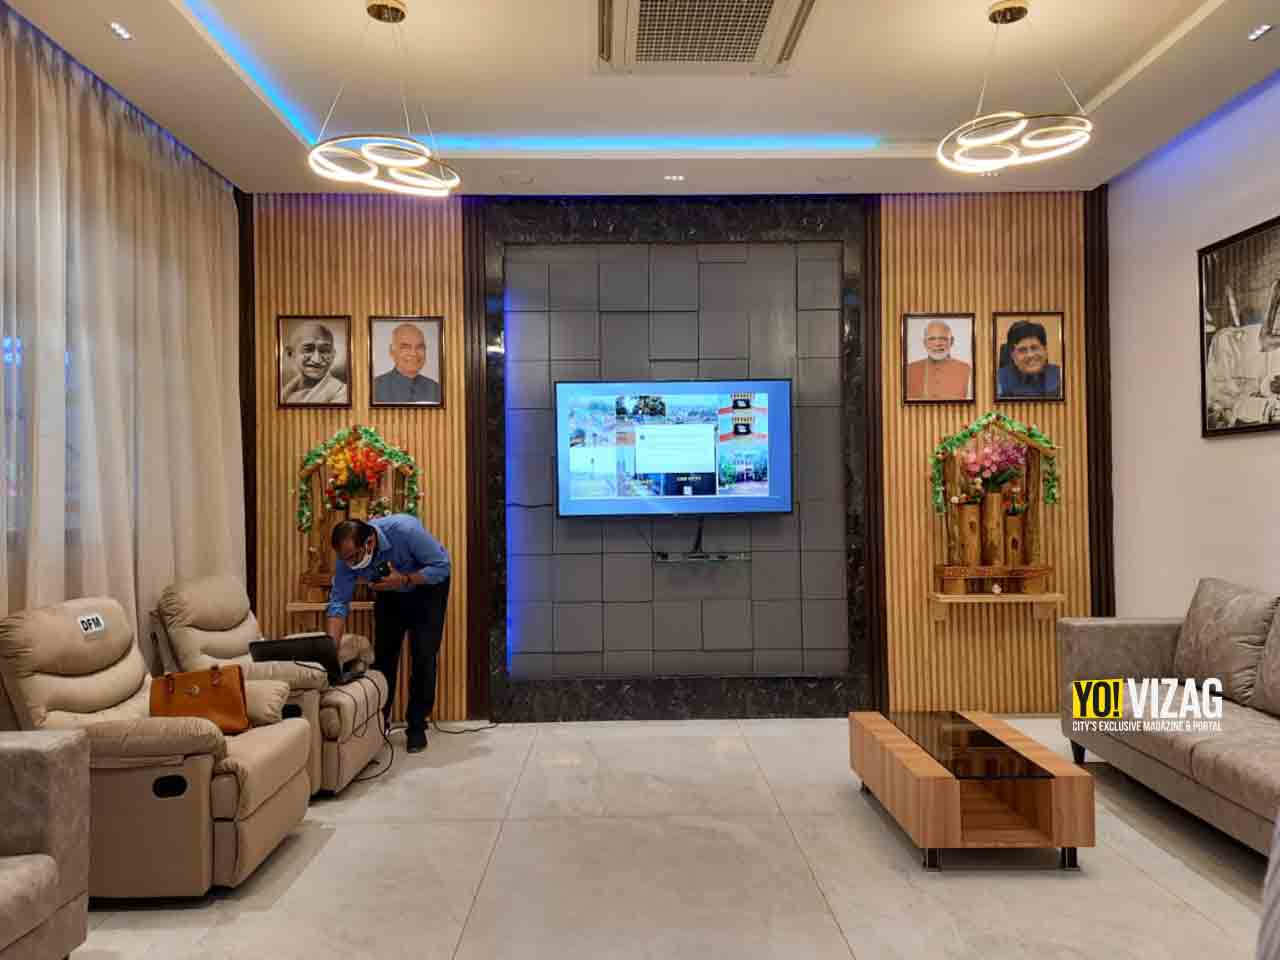 See Pics: Reserve lounge at Visakhapatnam railway station renovated